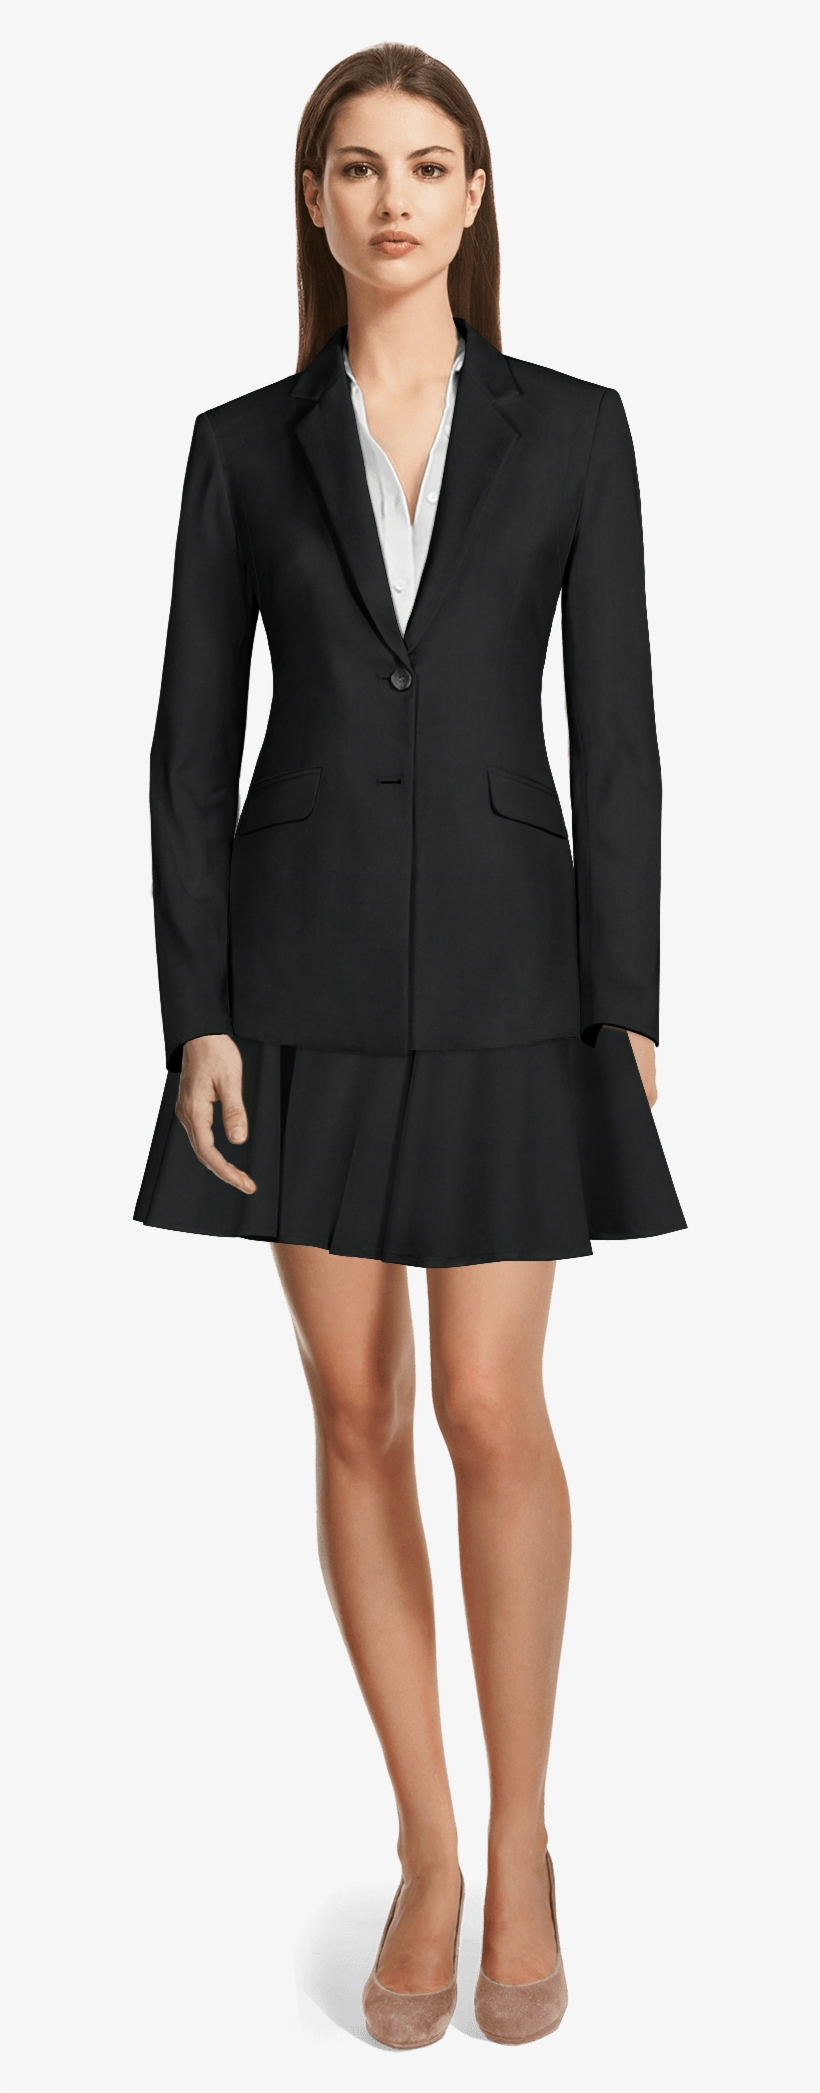 Black 100% Wool Skirt Suit - Sumissura Women's Black Polyester Tuxedo ...